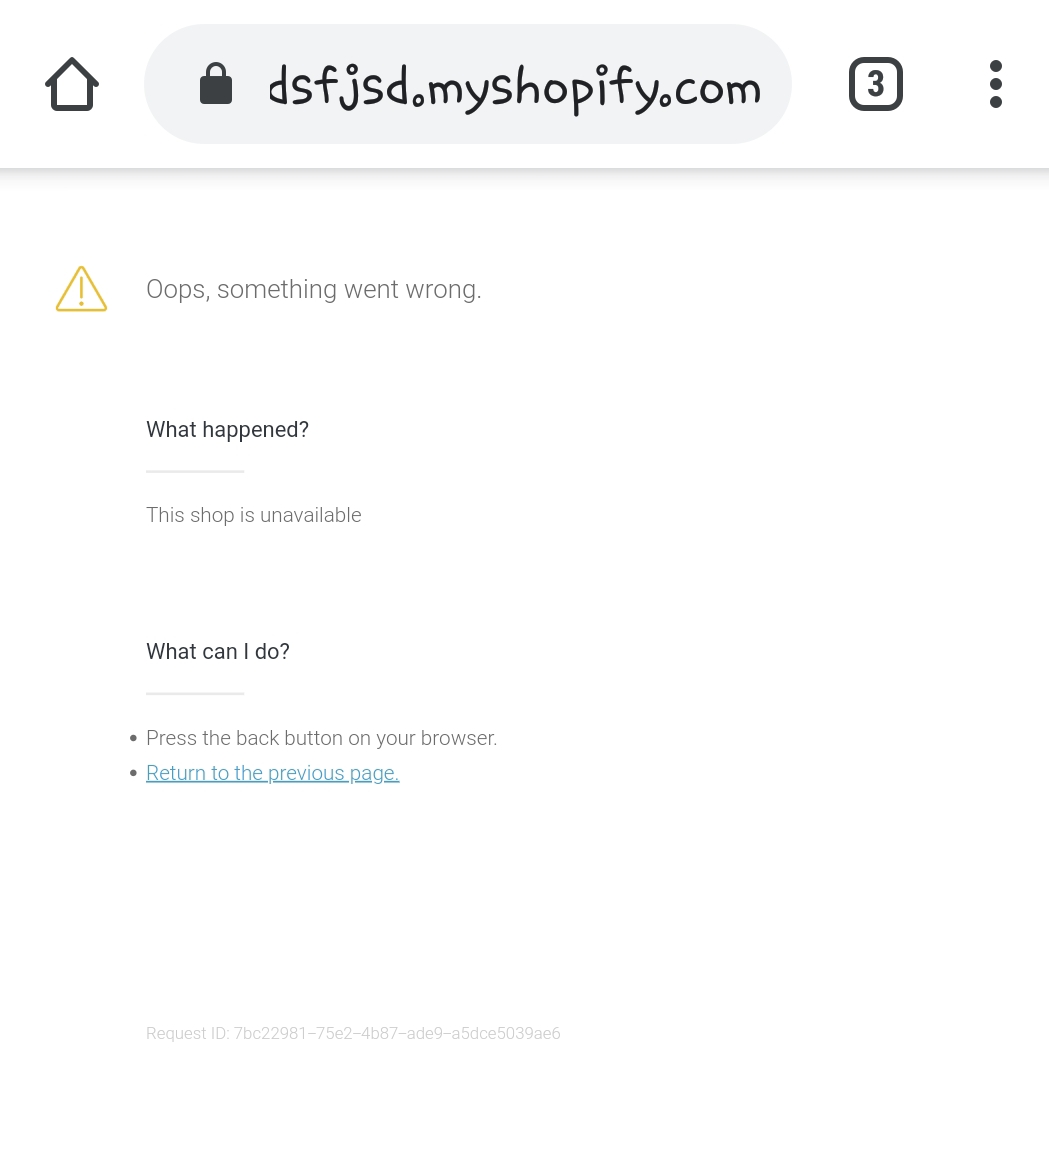 Error info about their shop capture